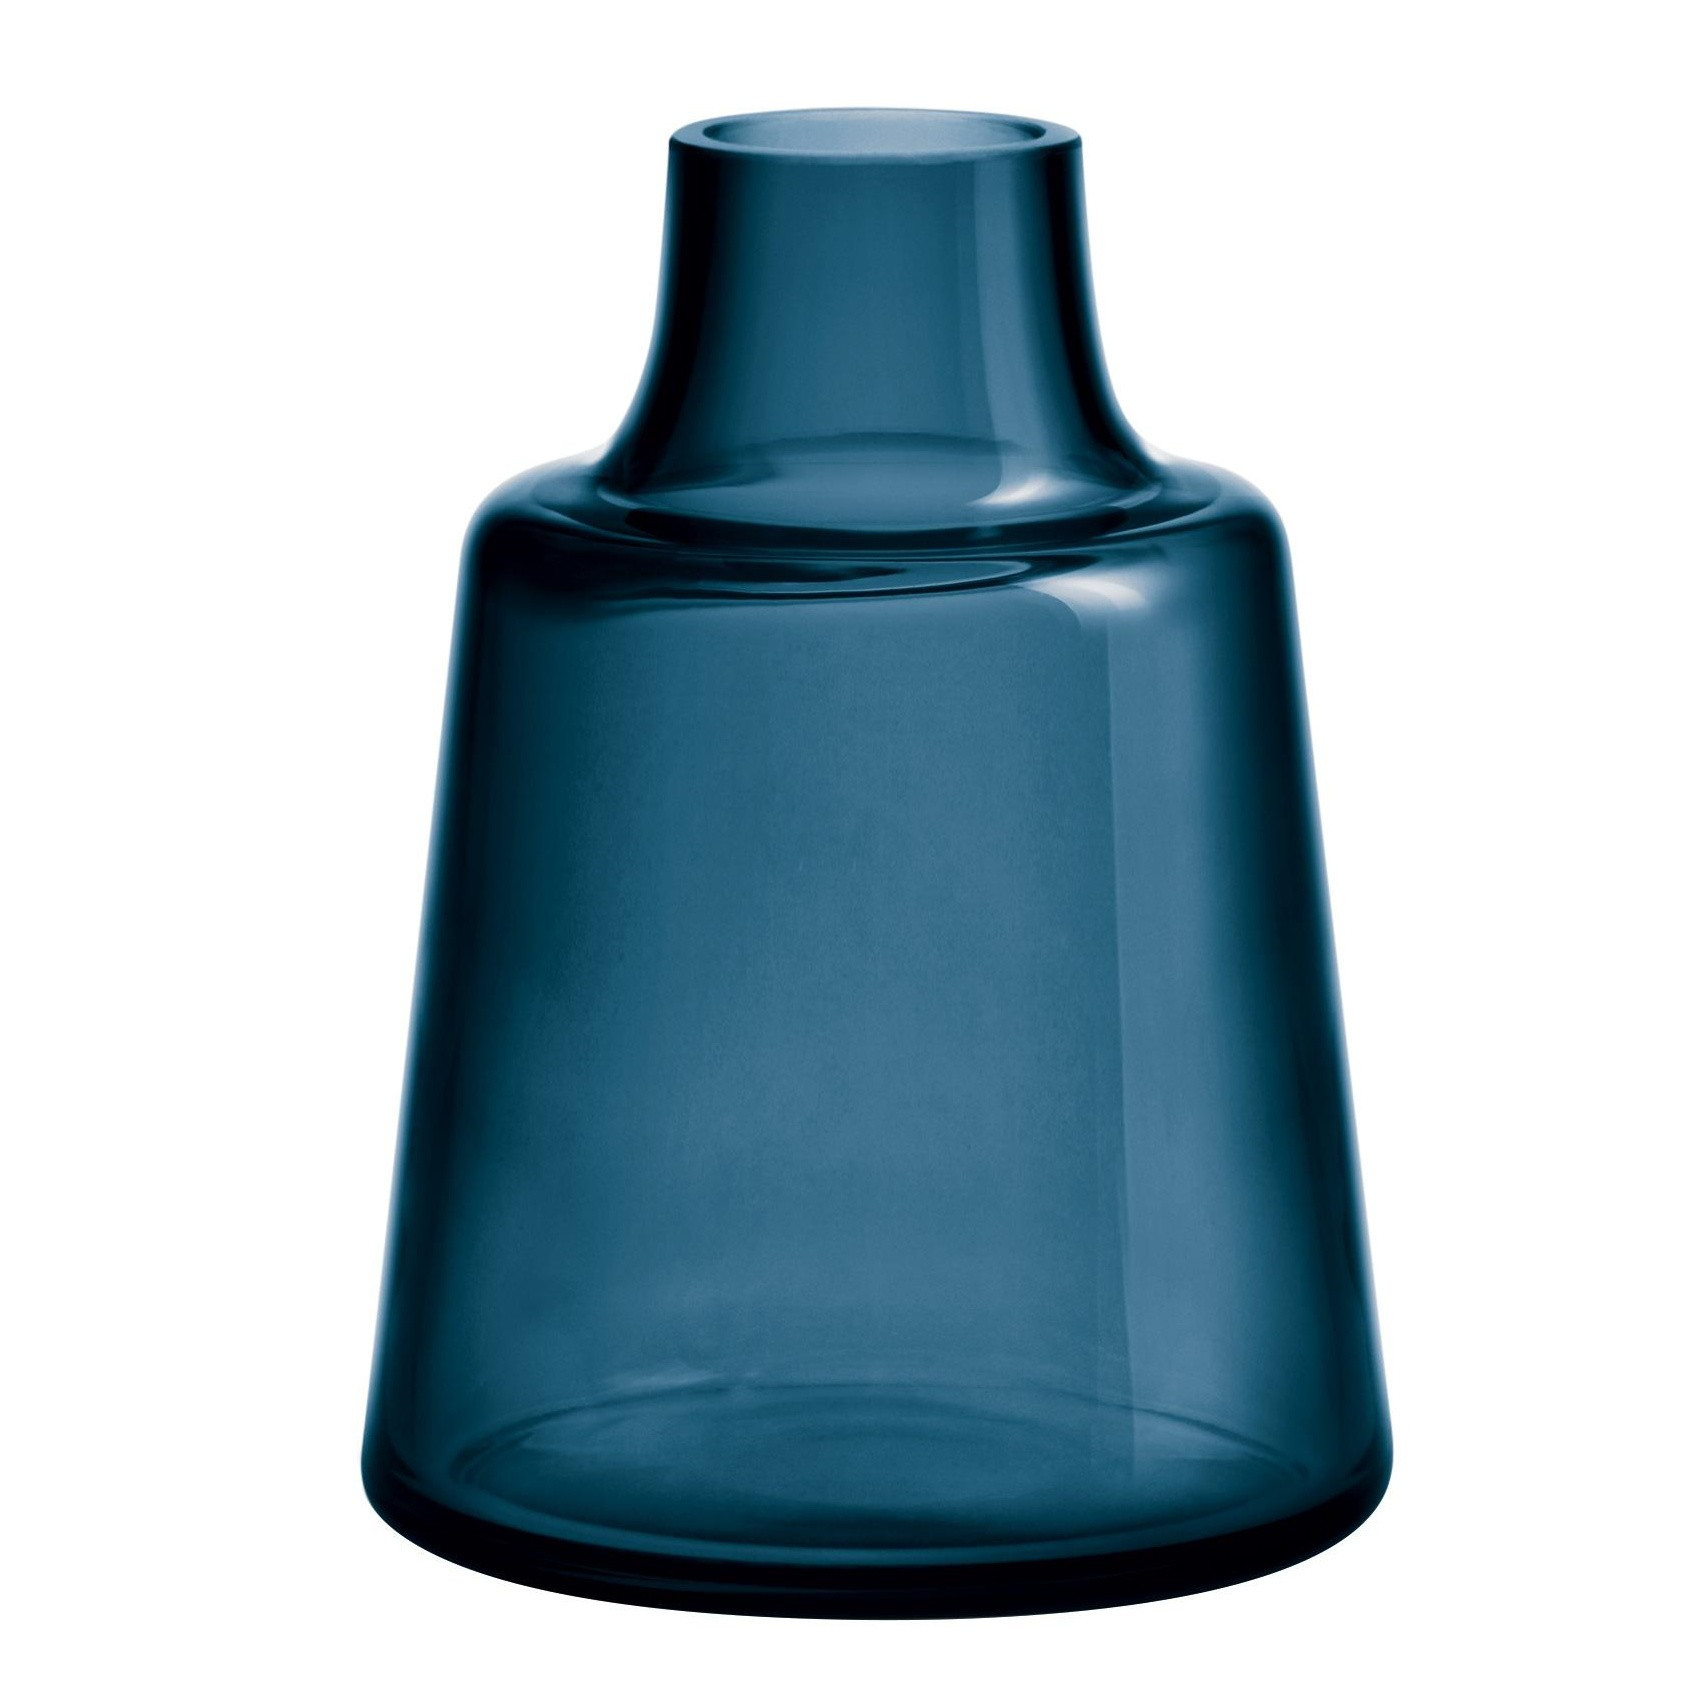 29 attractive Blue Plastic Vase 2024 free download blue plastic vase of holmegaard flora vase h 24cm ambientedirect in 232361 1700x1700 id1922502 c23d7e4f57bf890f68b32fb46a88790c